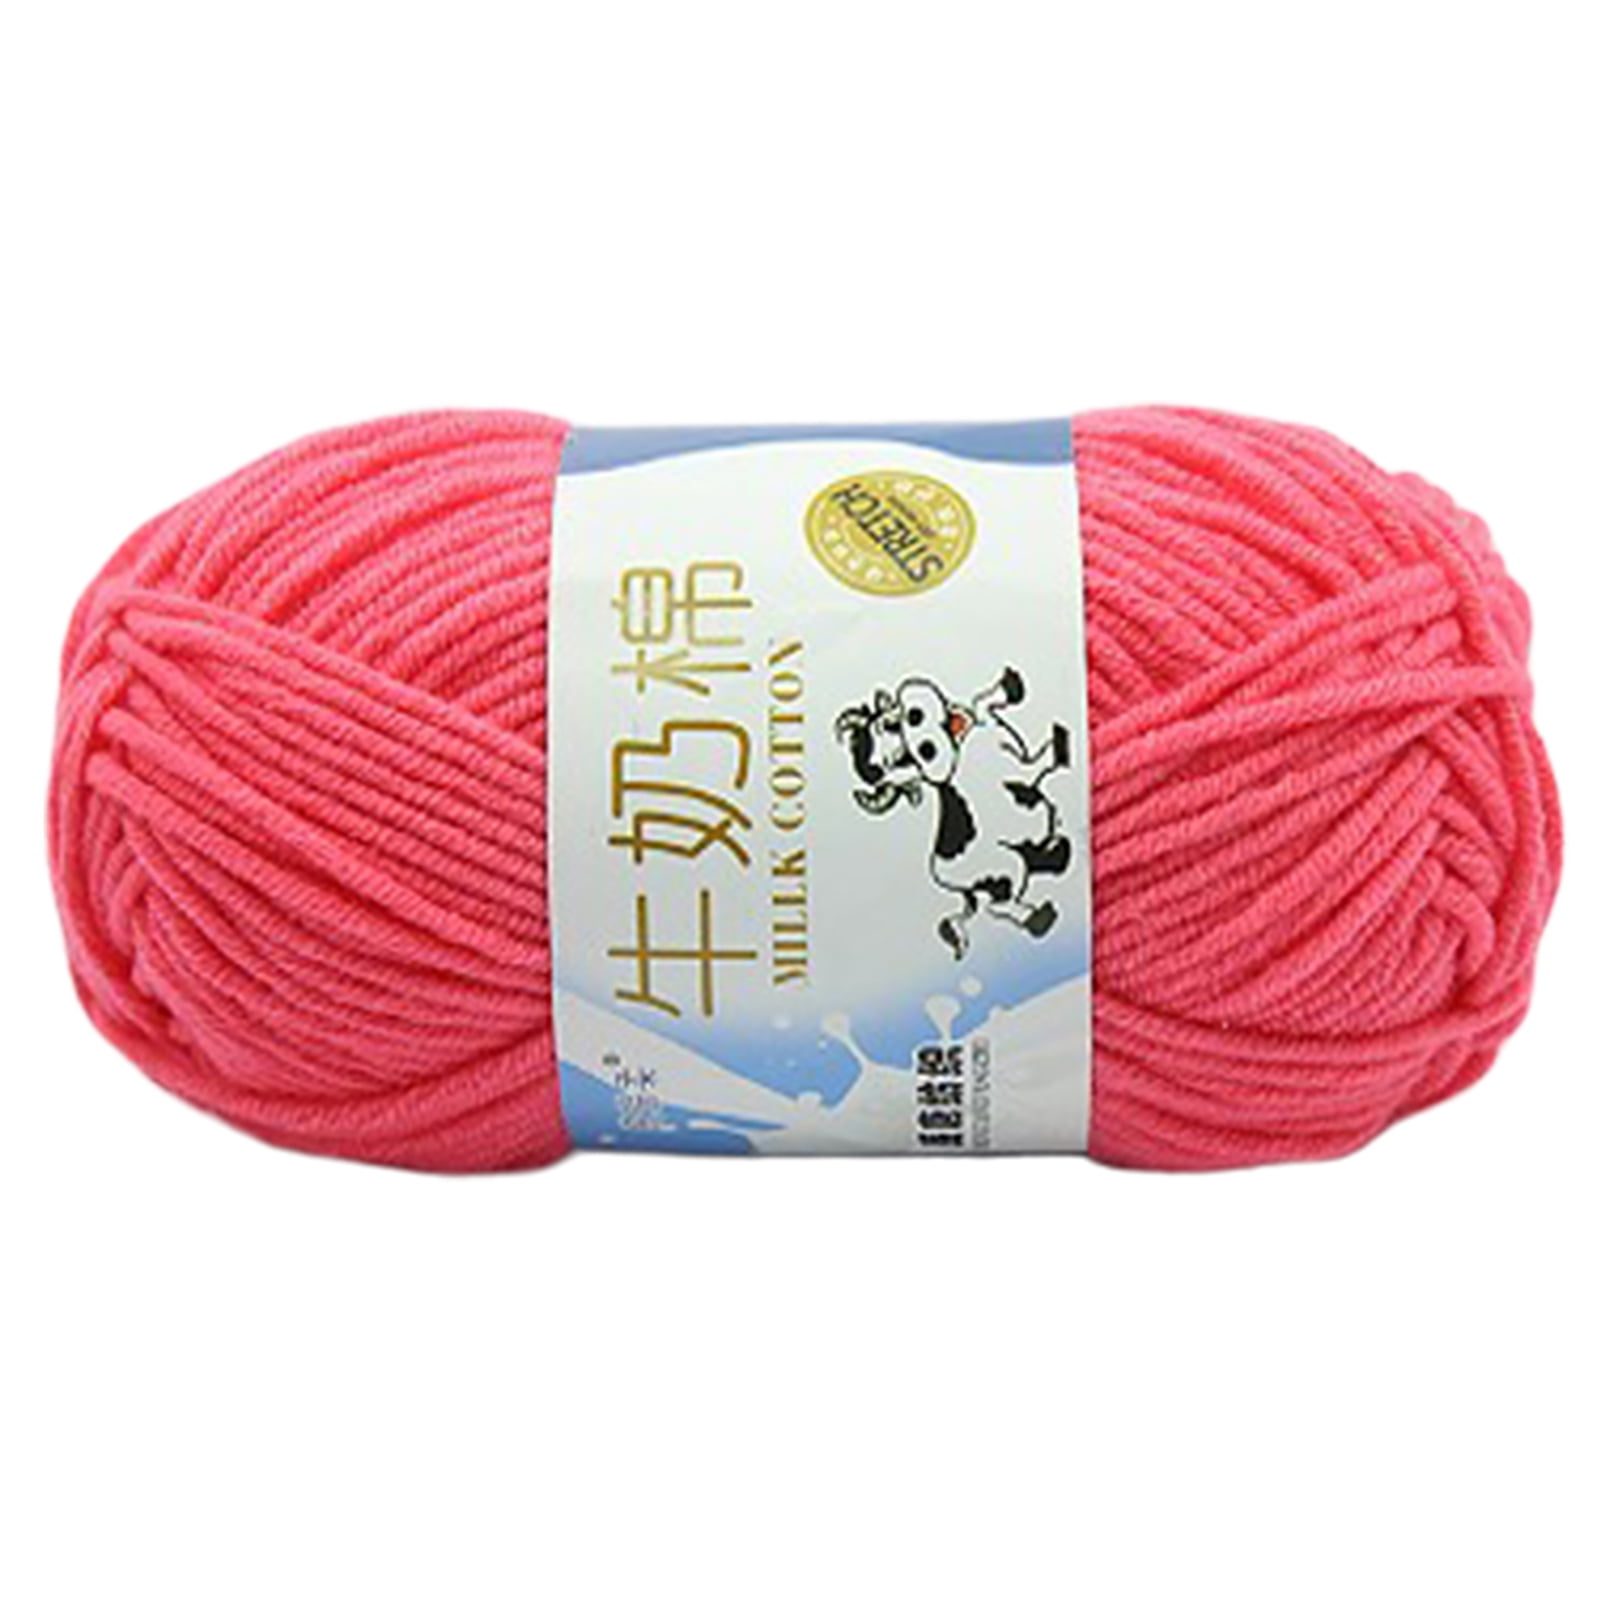 Soft Yarn Yarn Skeins Bulk Yarn Kit for Gift